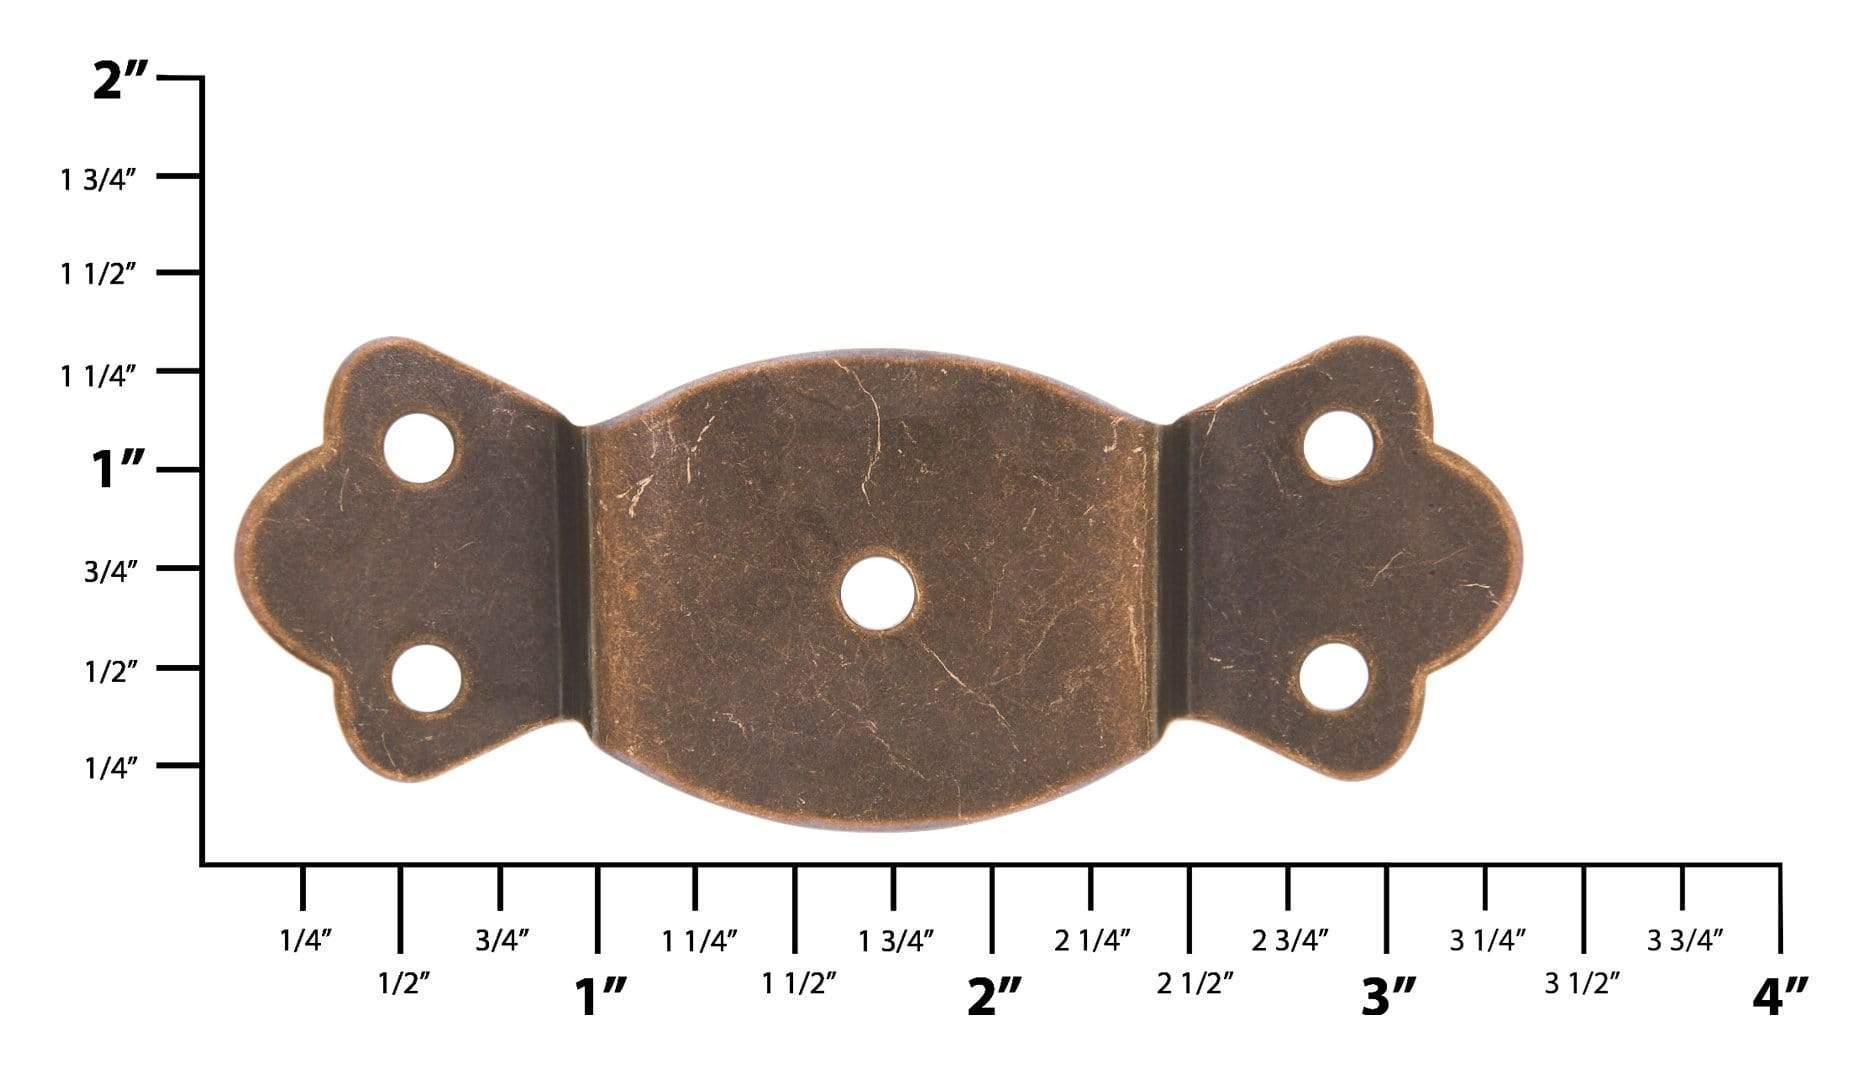 Ohio Travel Bag Trunk Lock, 3-1/2 inch, Antique Brass Finish, Steel, G-1-ANTB